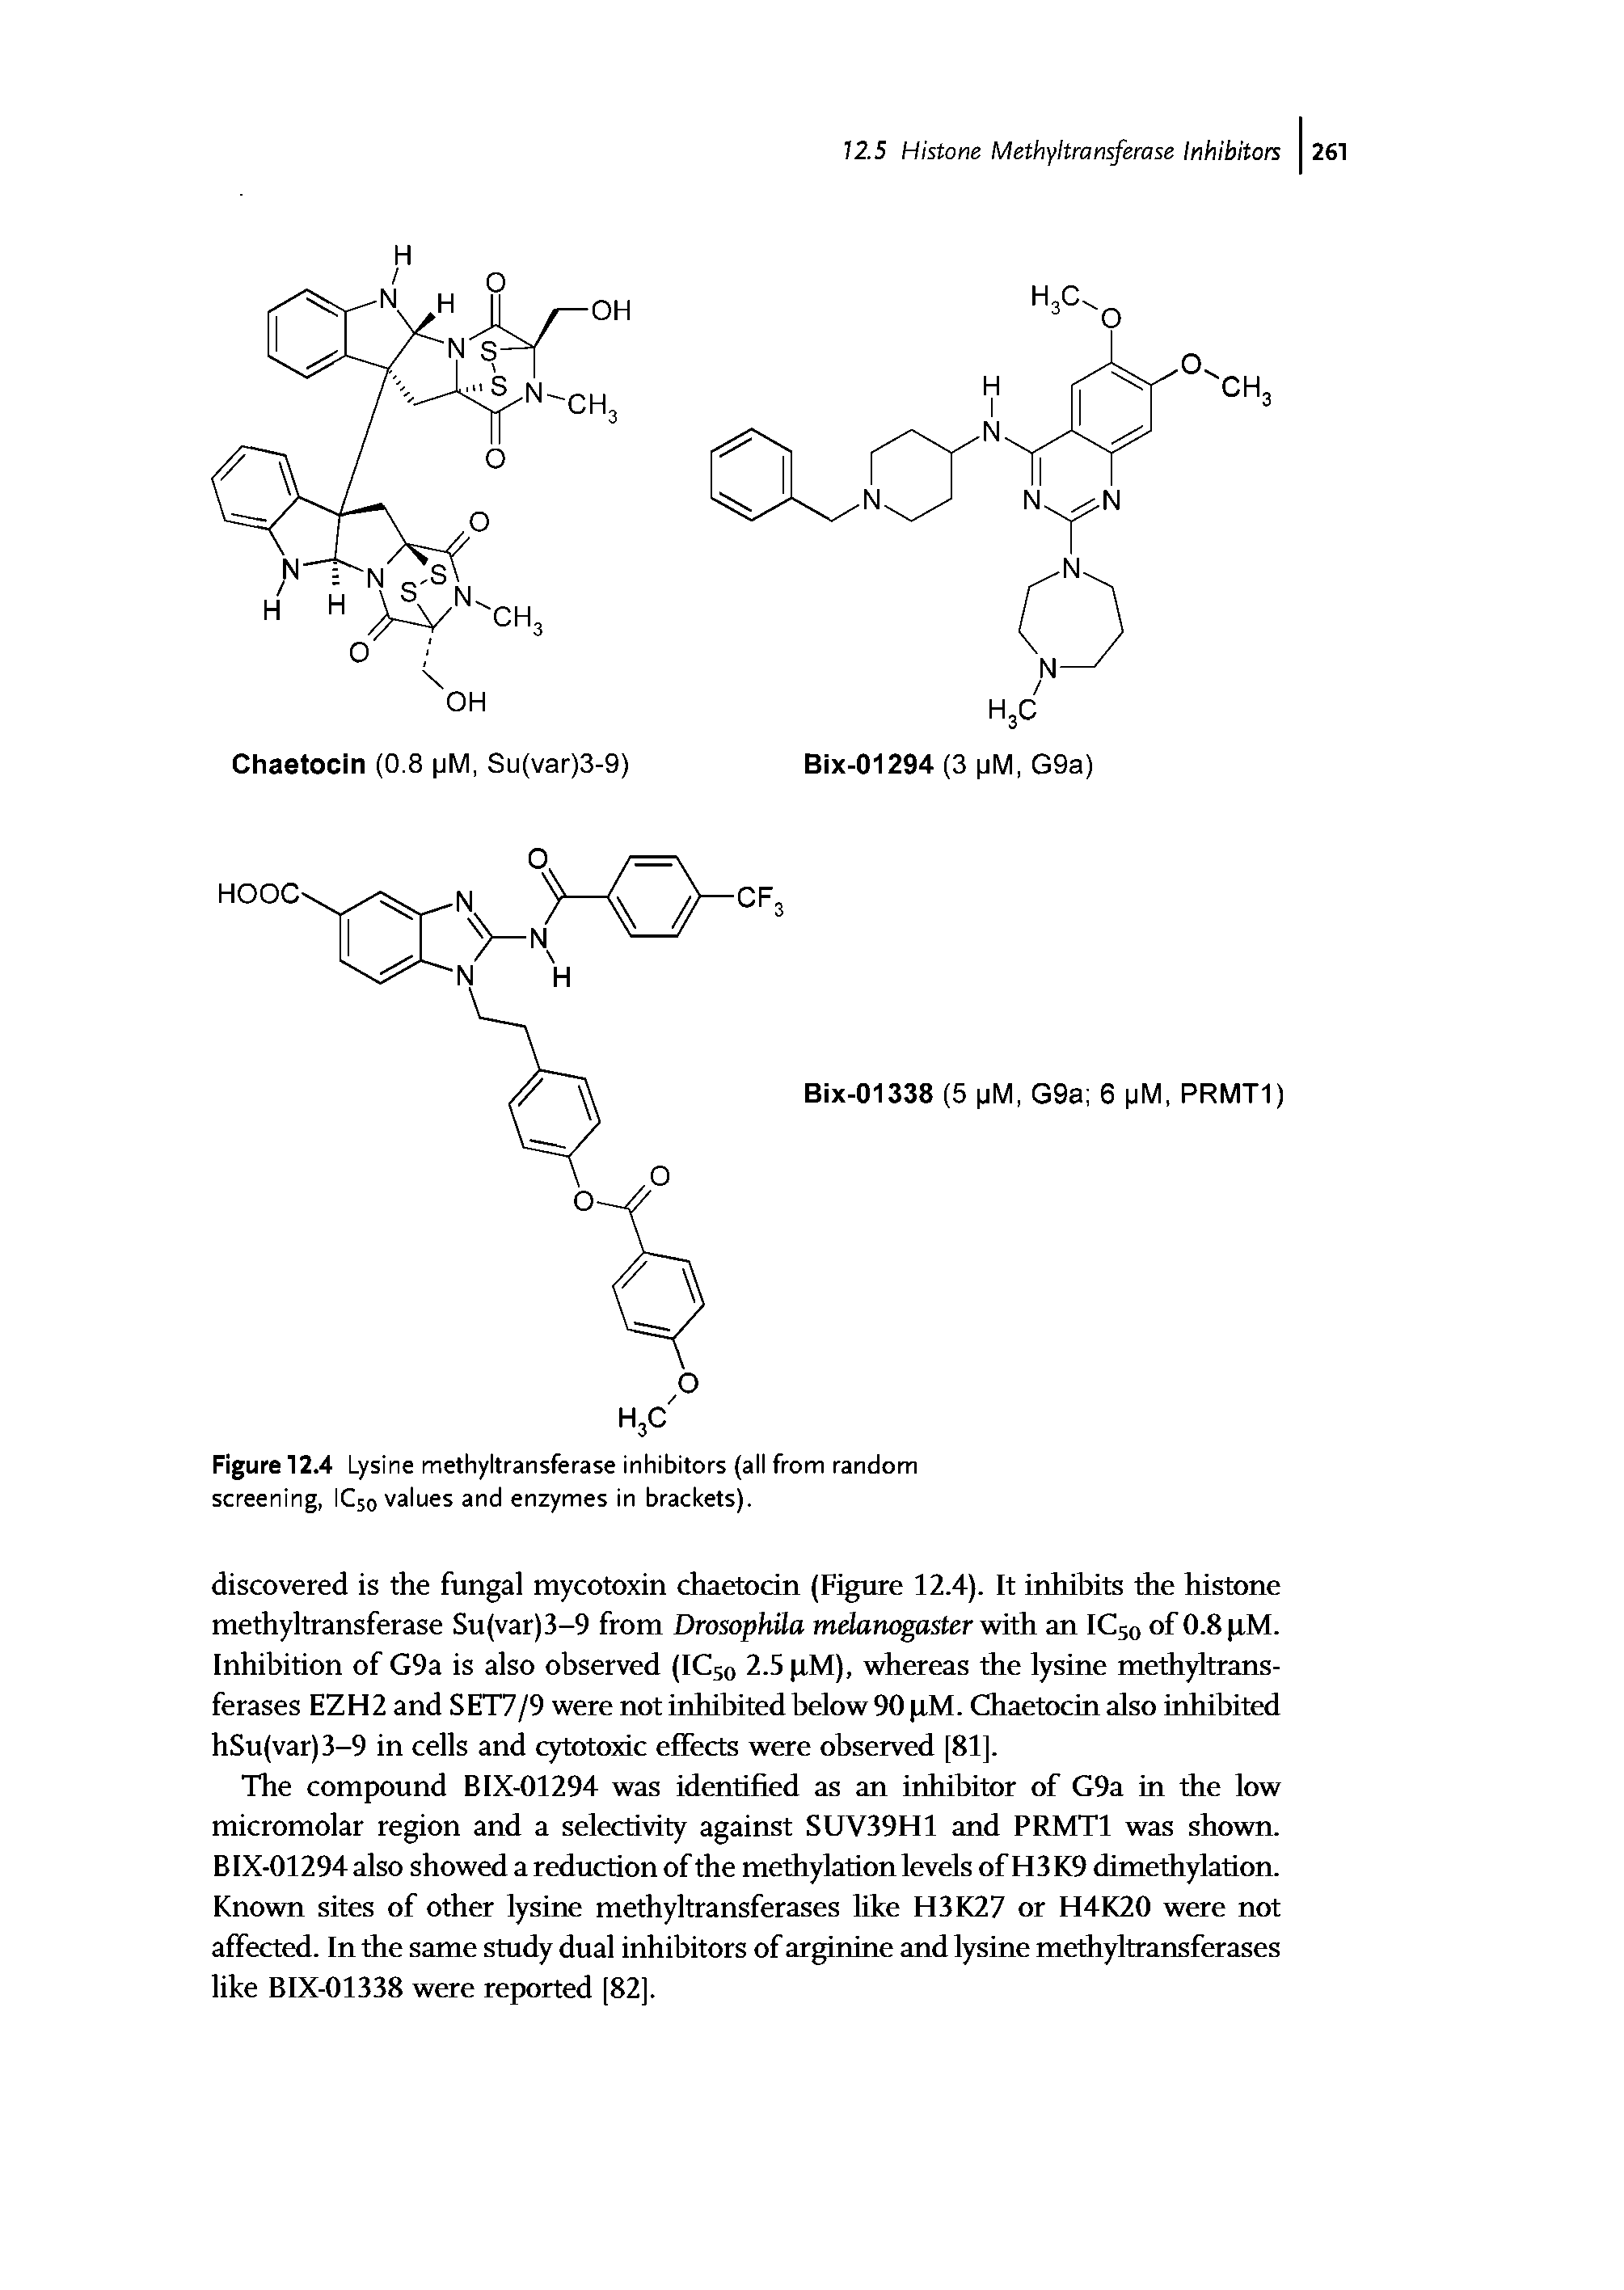 Figure 12.4 Lysine methyltransferase inhibitors (all from random screening, IC50 values and enzymes in brackets).